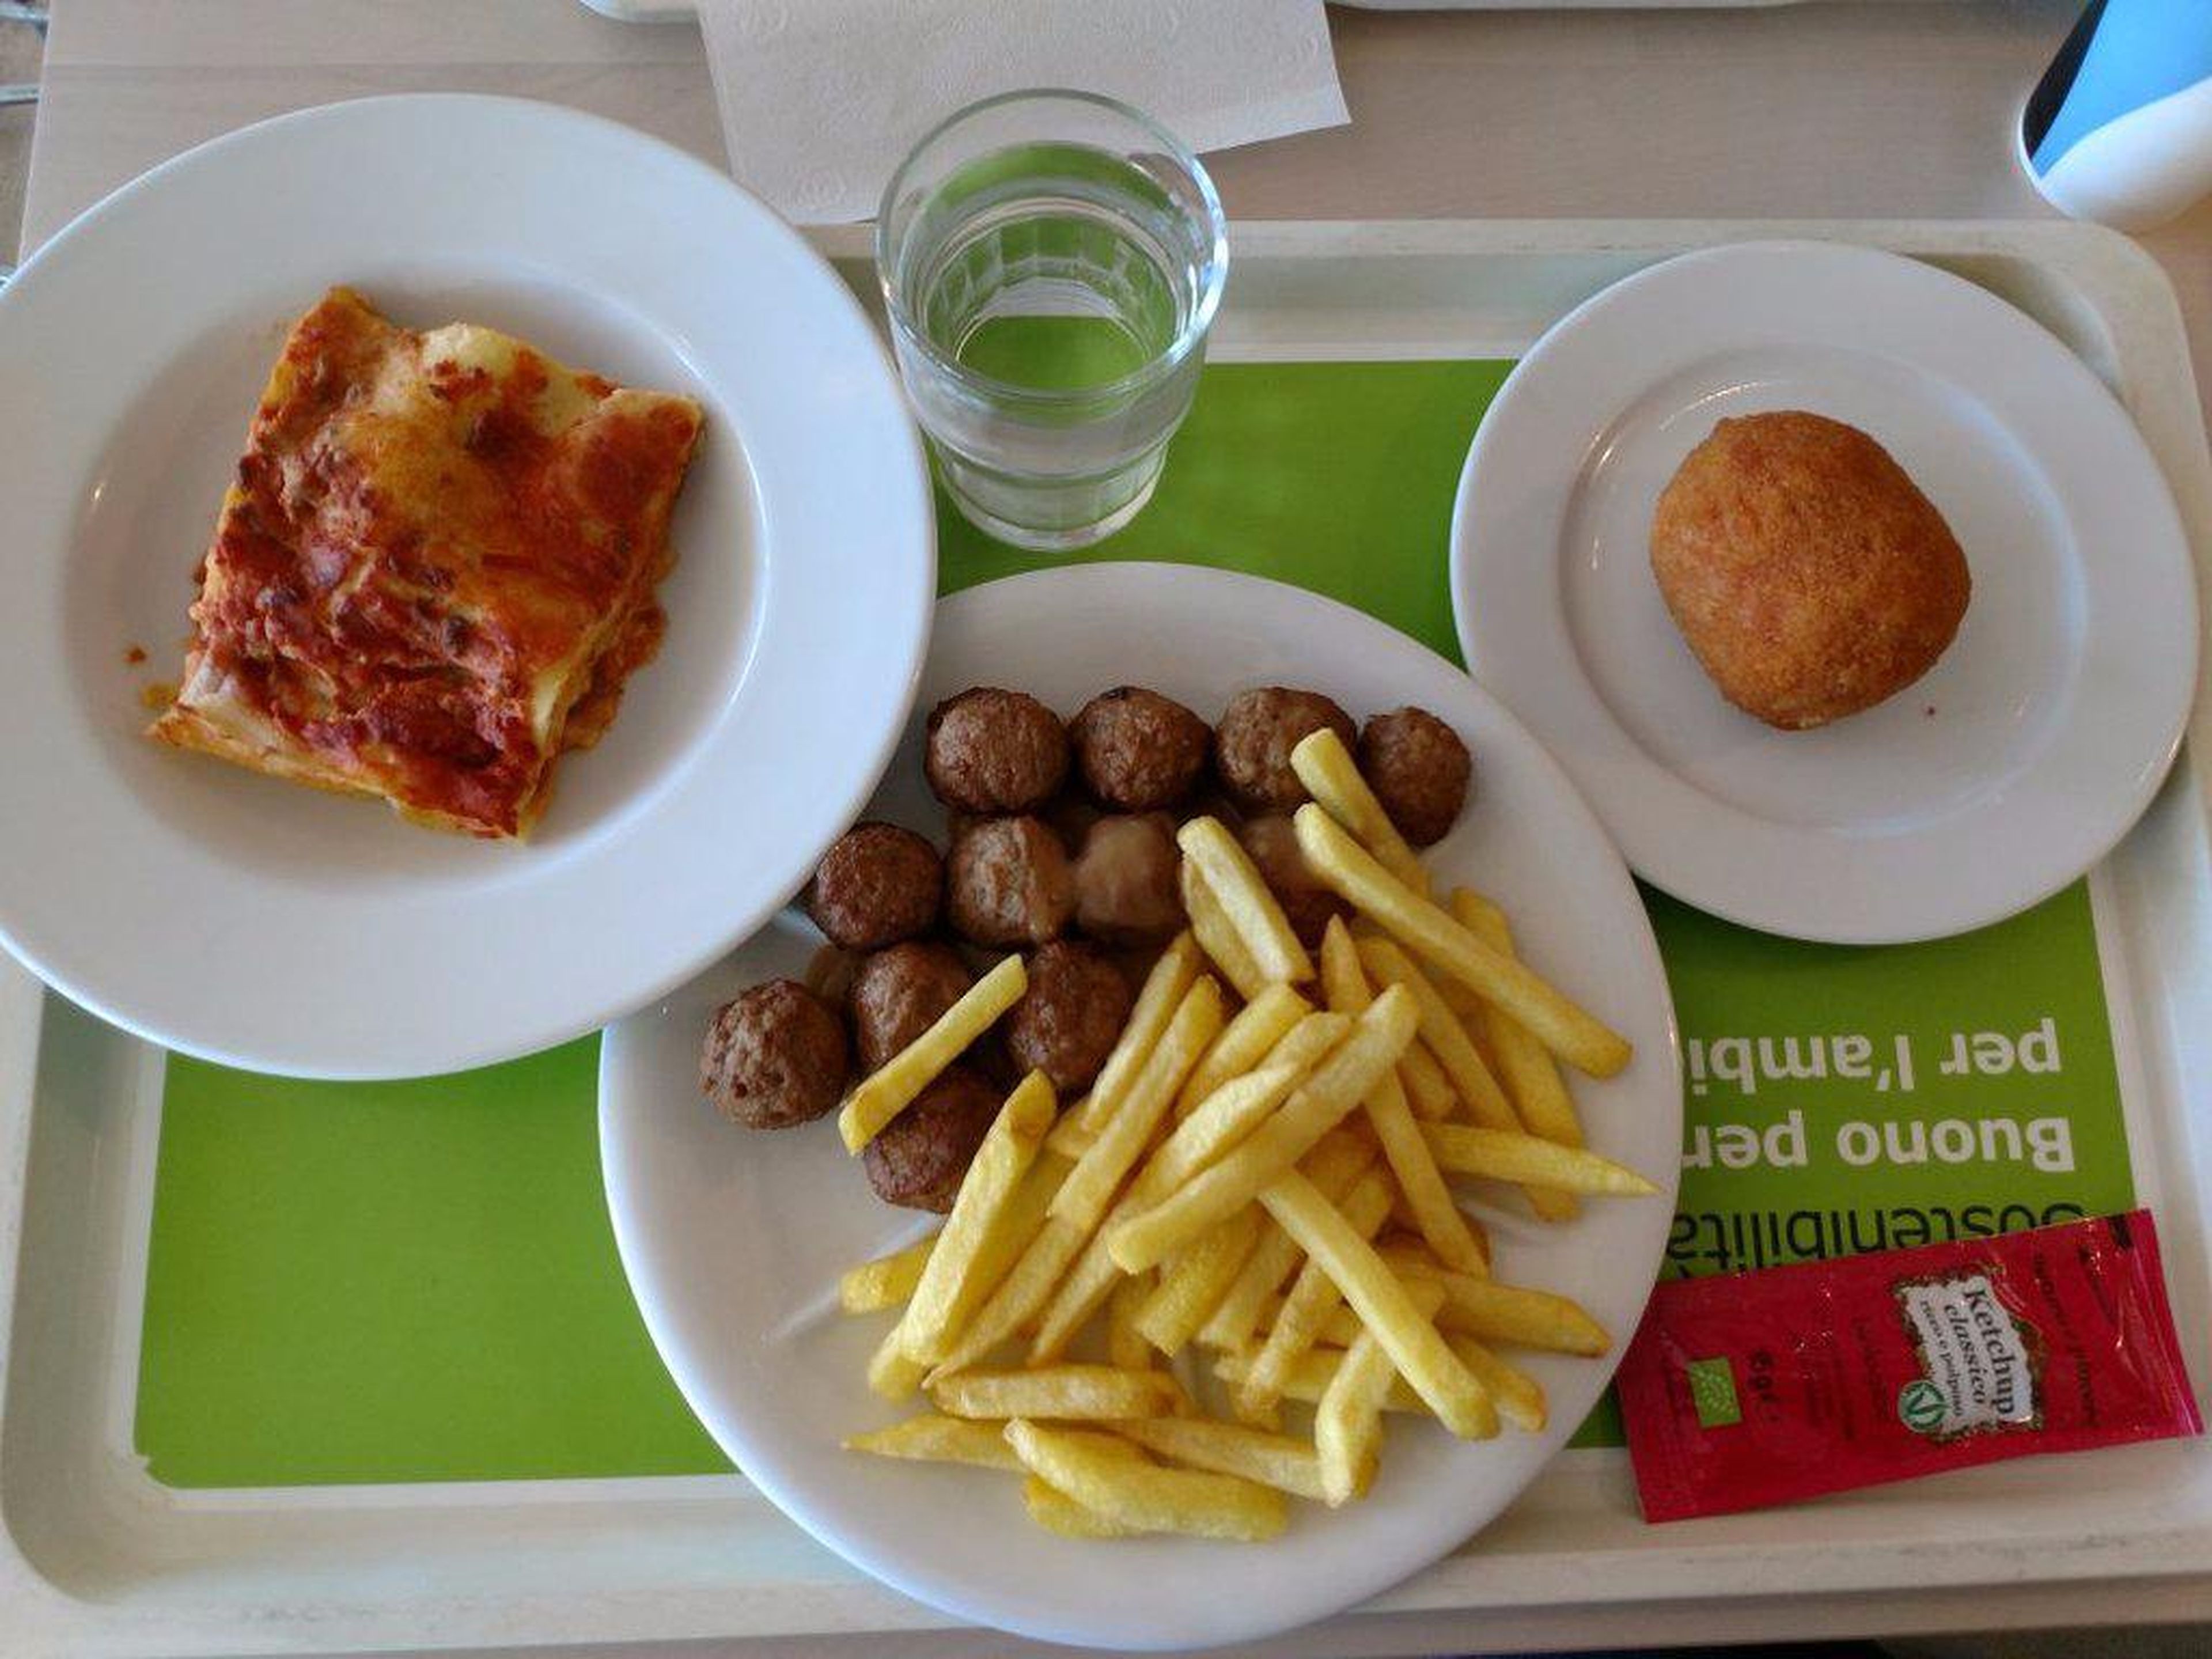 Italian IKEA shoppers can order meatballs, lasagna, or both.